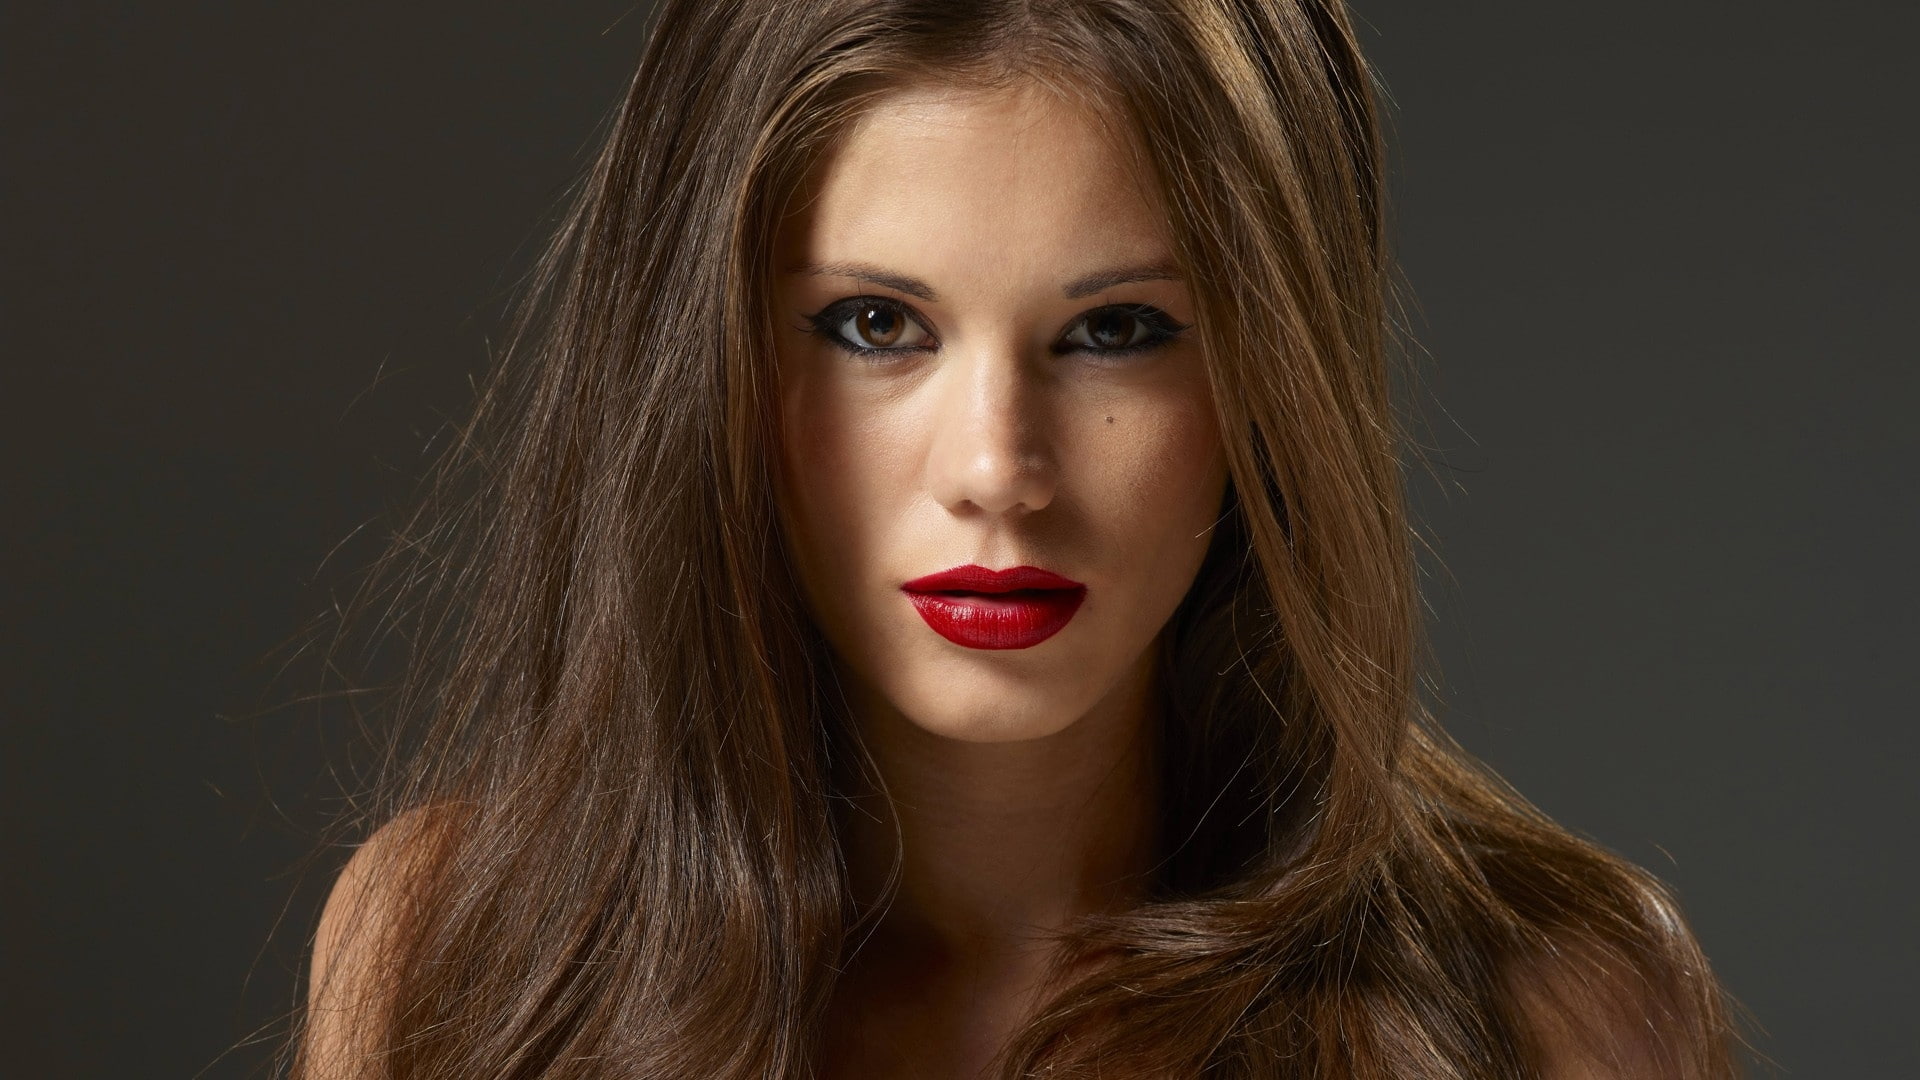 brunettes women closeup models lips little caprice hegreart magazine faces red lips 1920x1080 w People Models Female HD Art